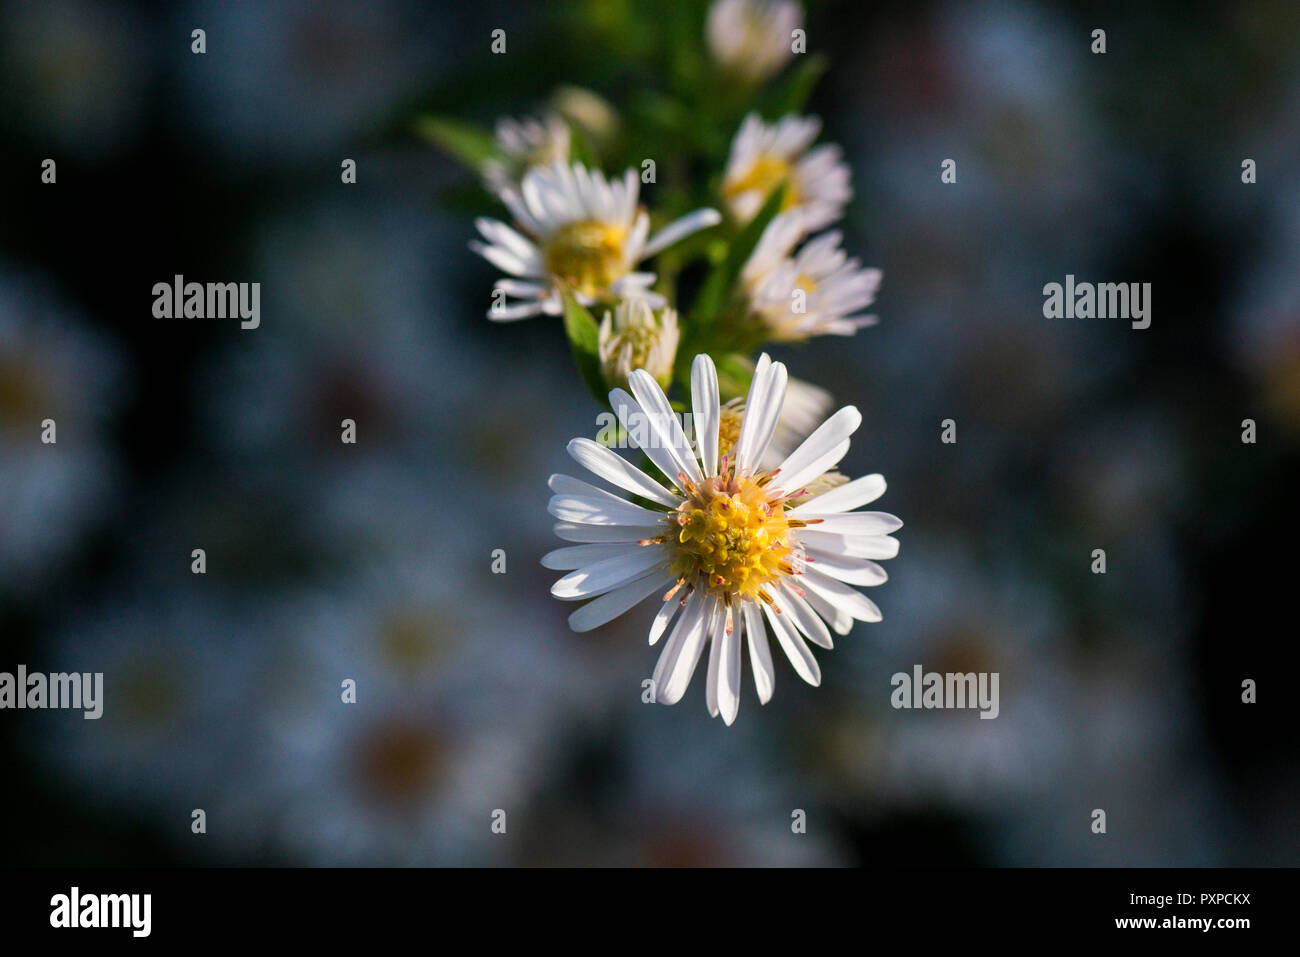 The flower of a white Michaelmas daisy in flower Stock Photo